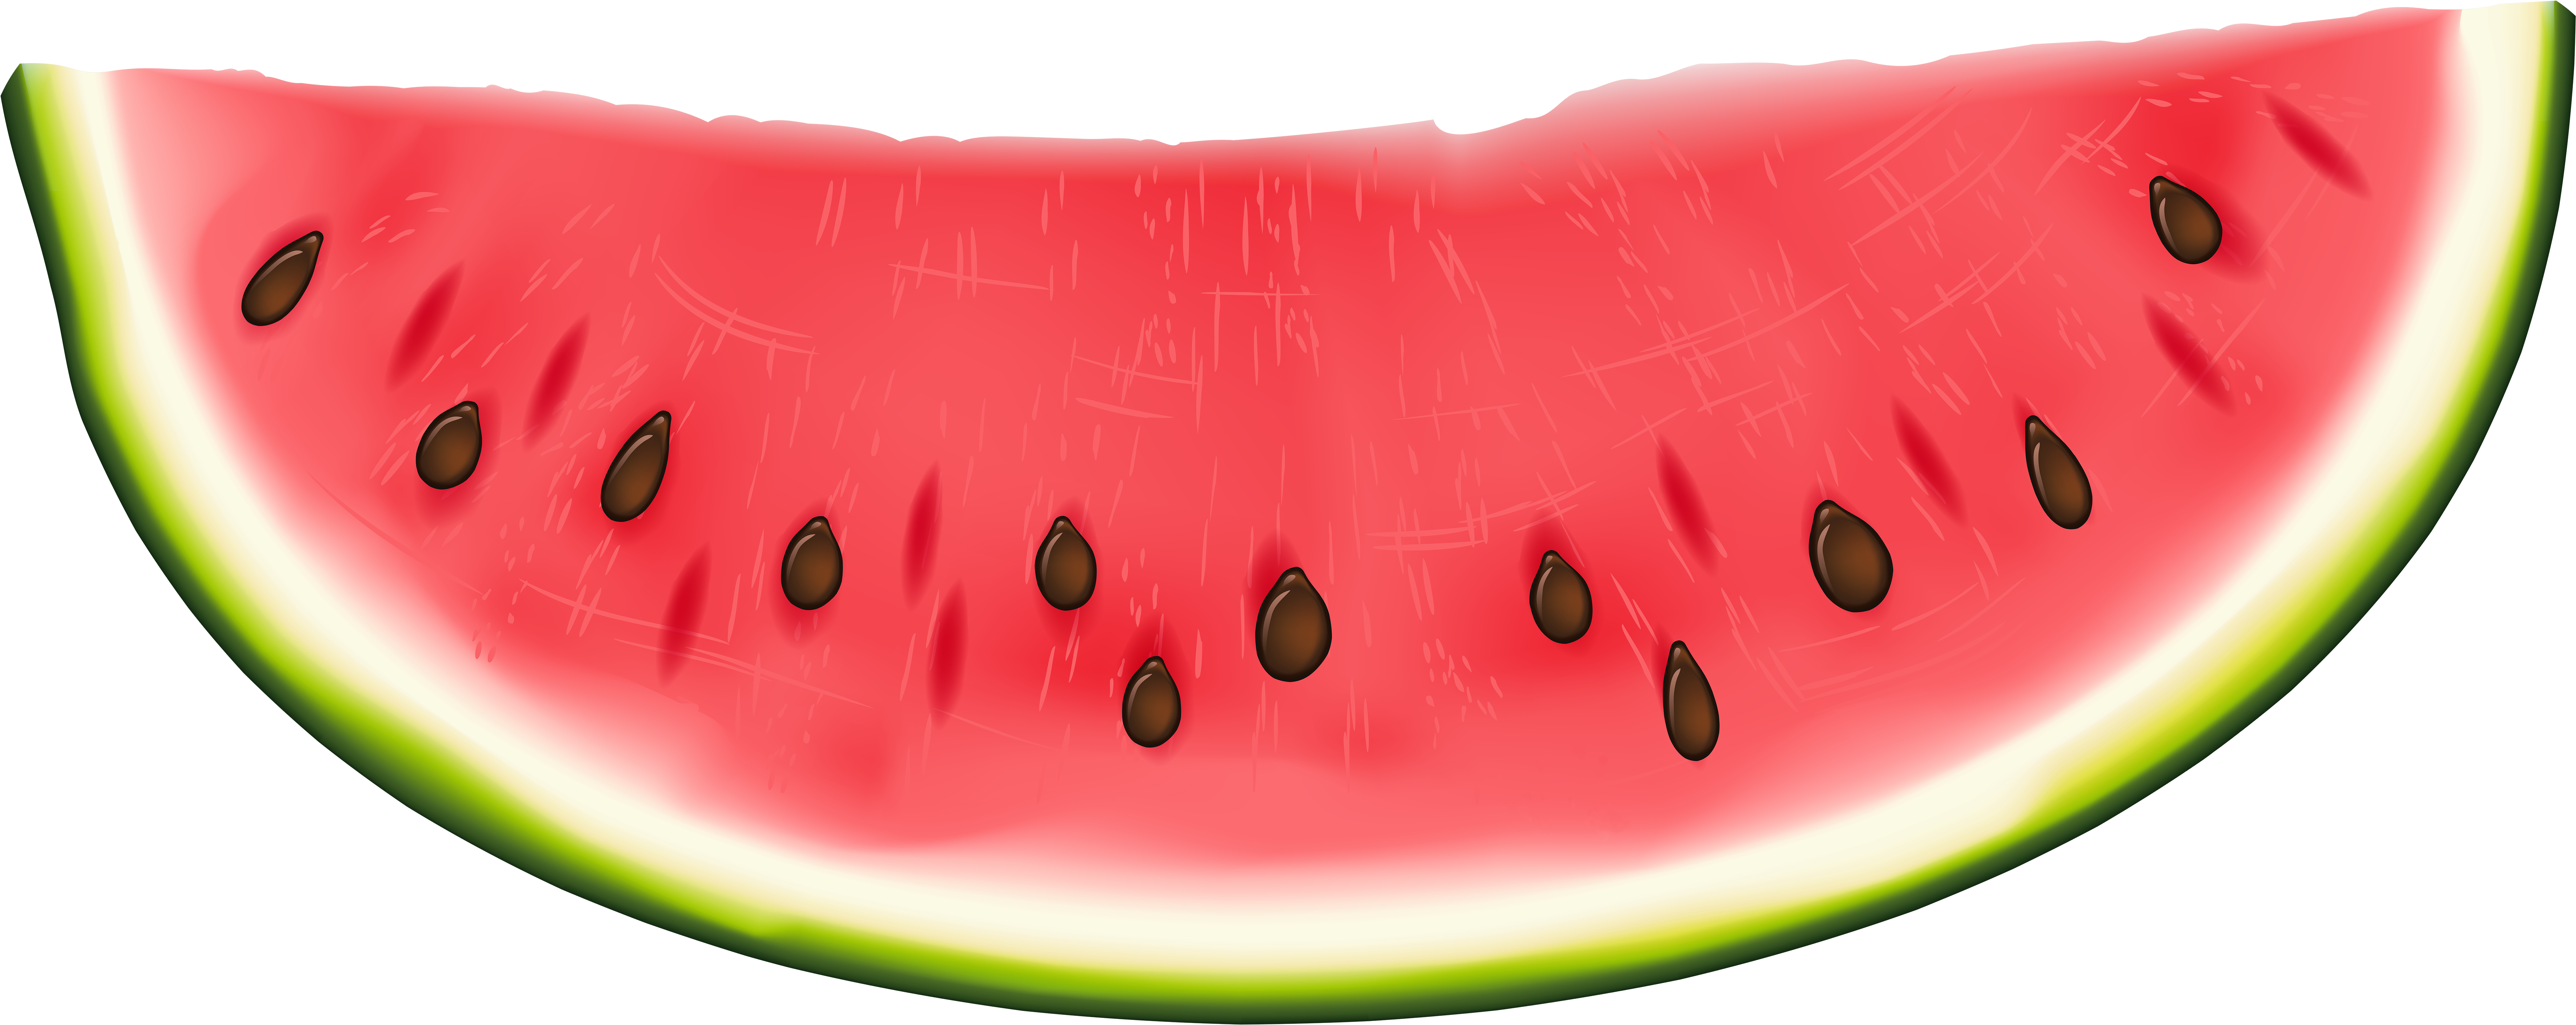 Watermelon Clip Art Image - Clip Art.